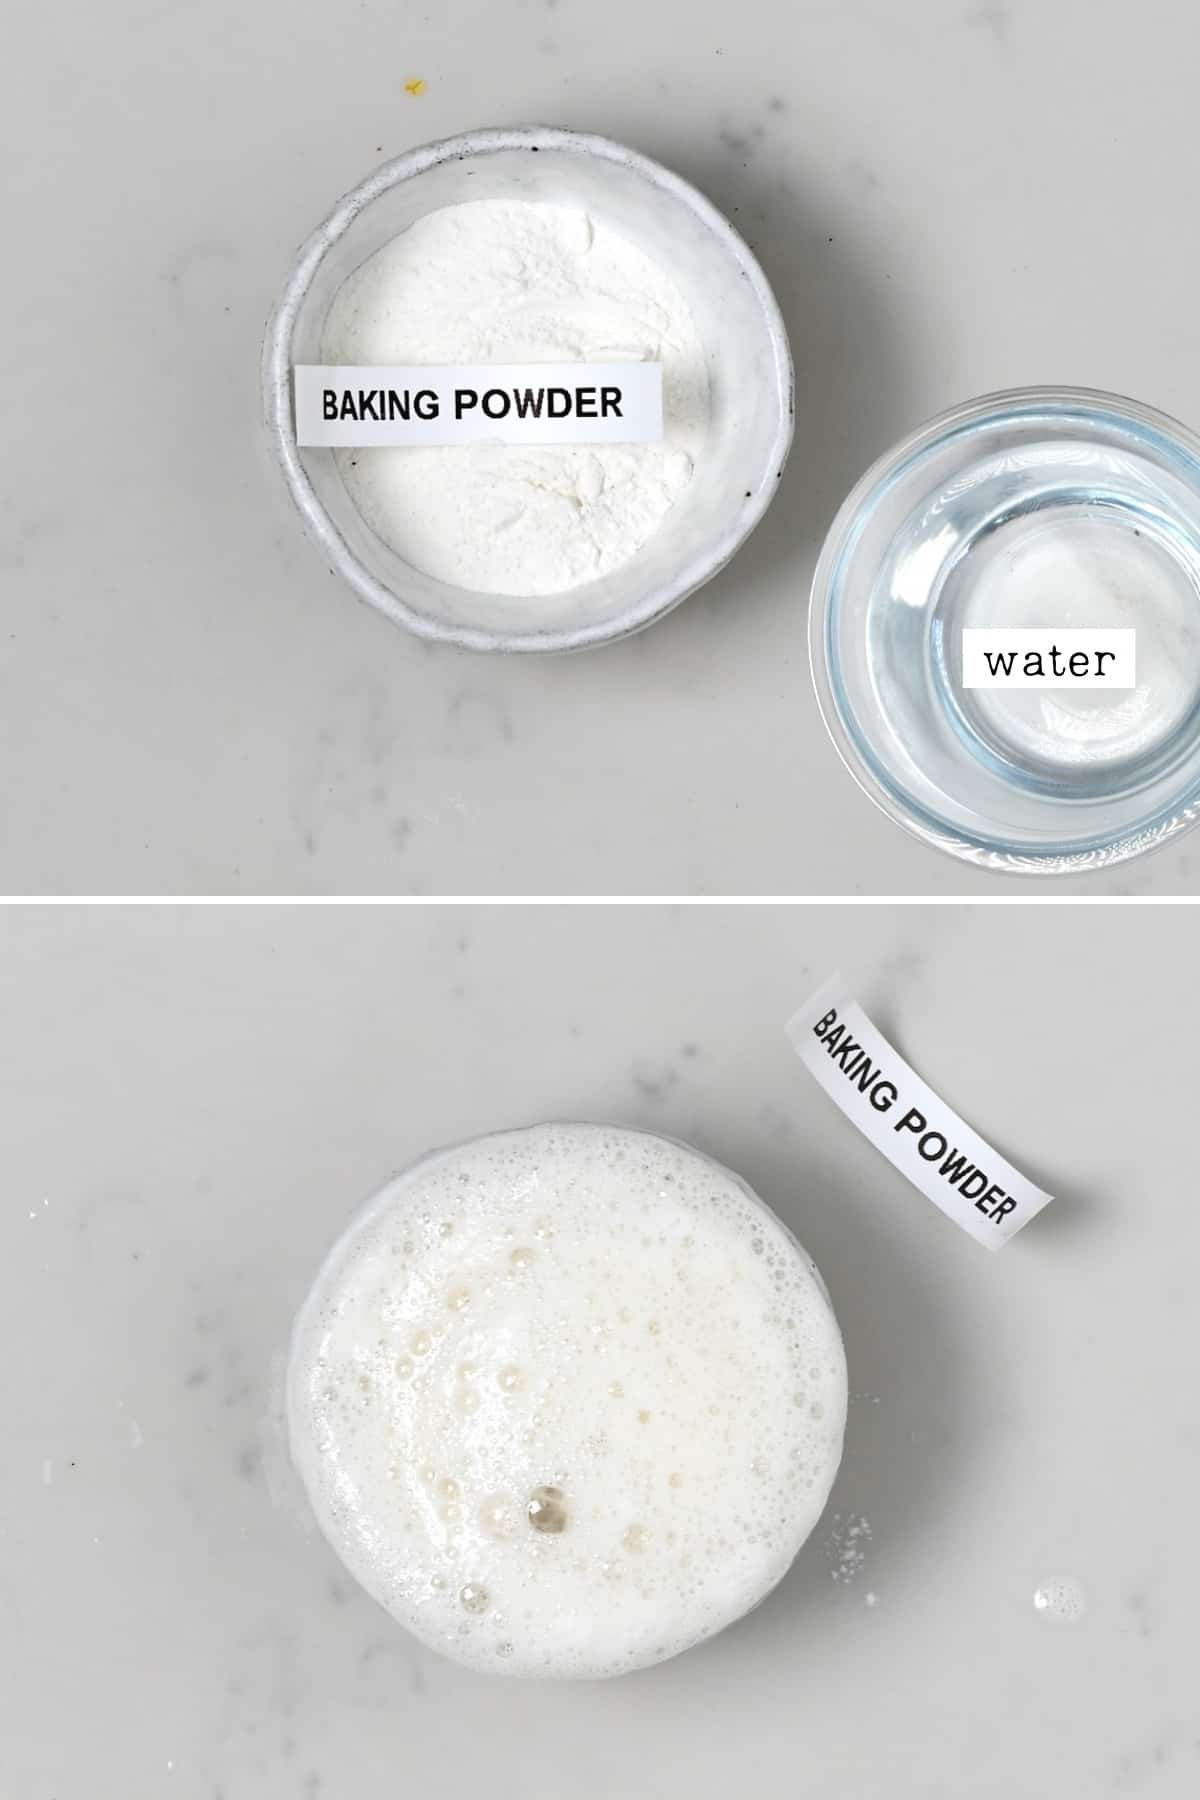 Mixing baking powder with water